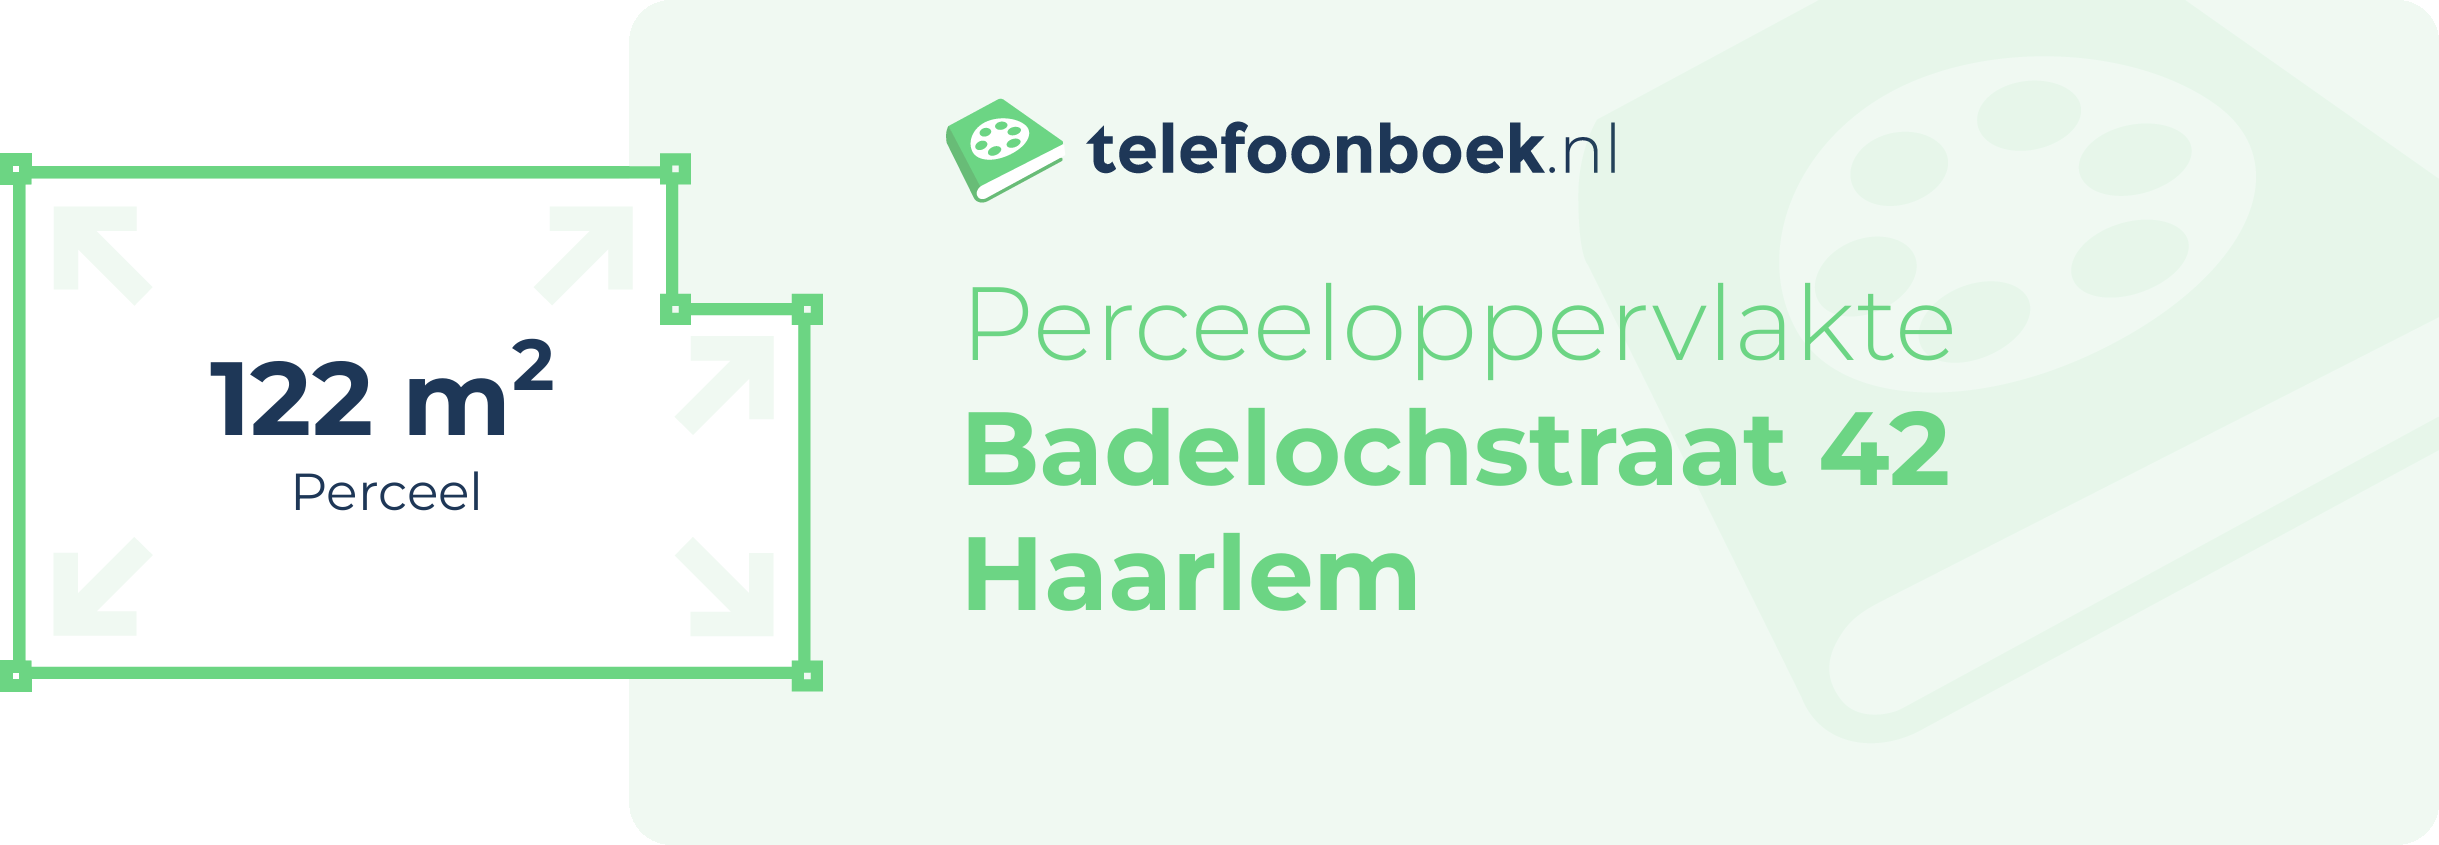 Perceeloppervlakte Badelochstraat 42 Haarlem